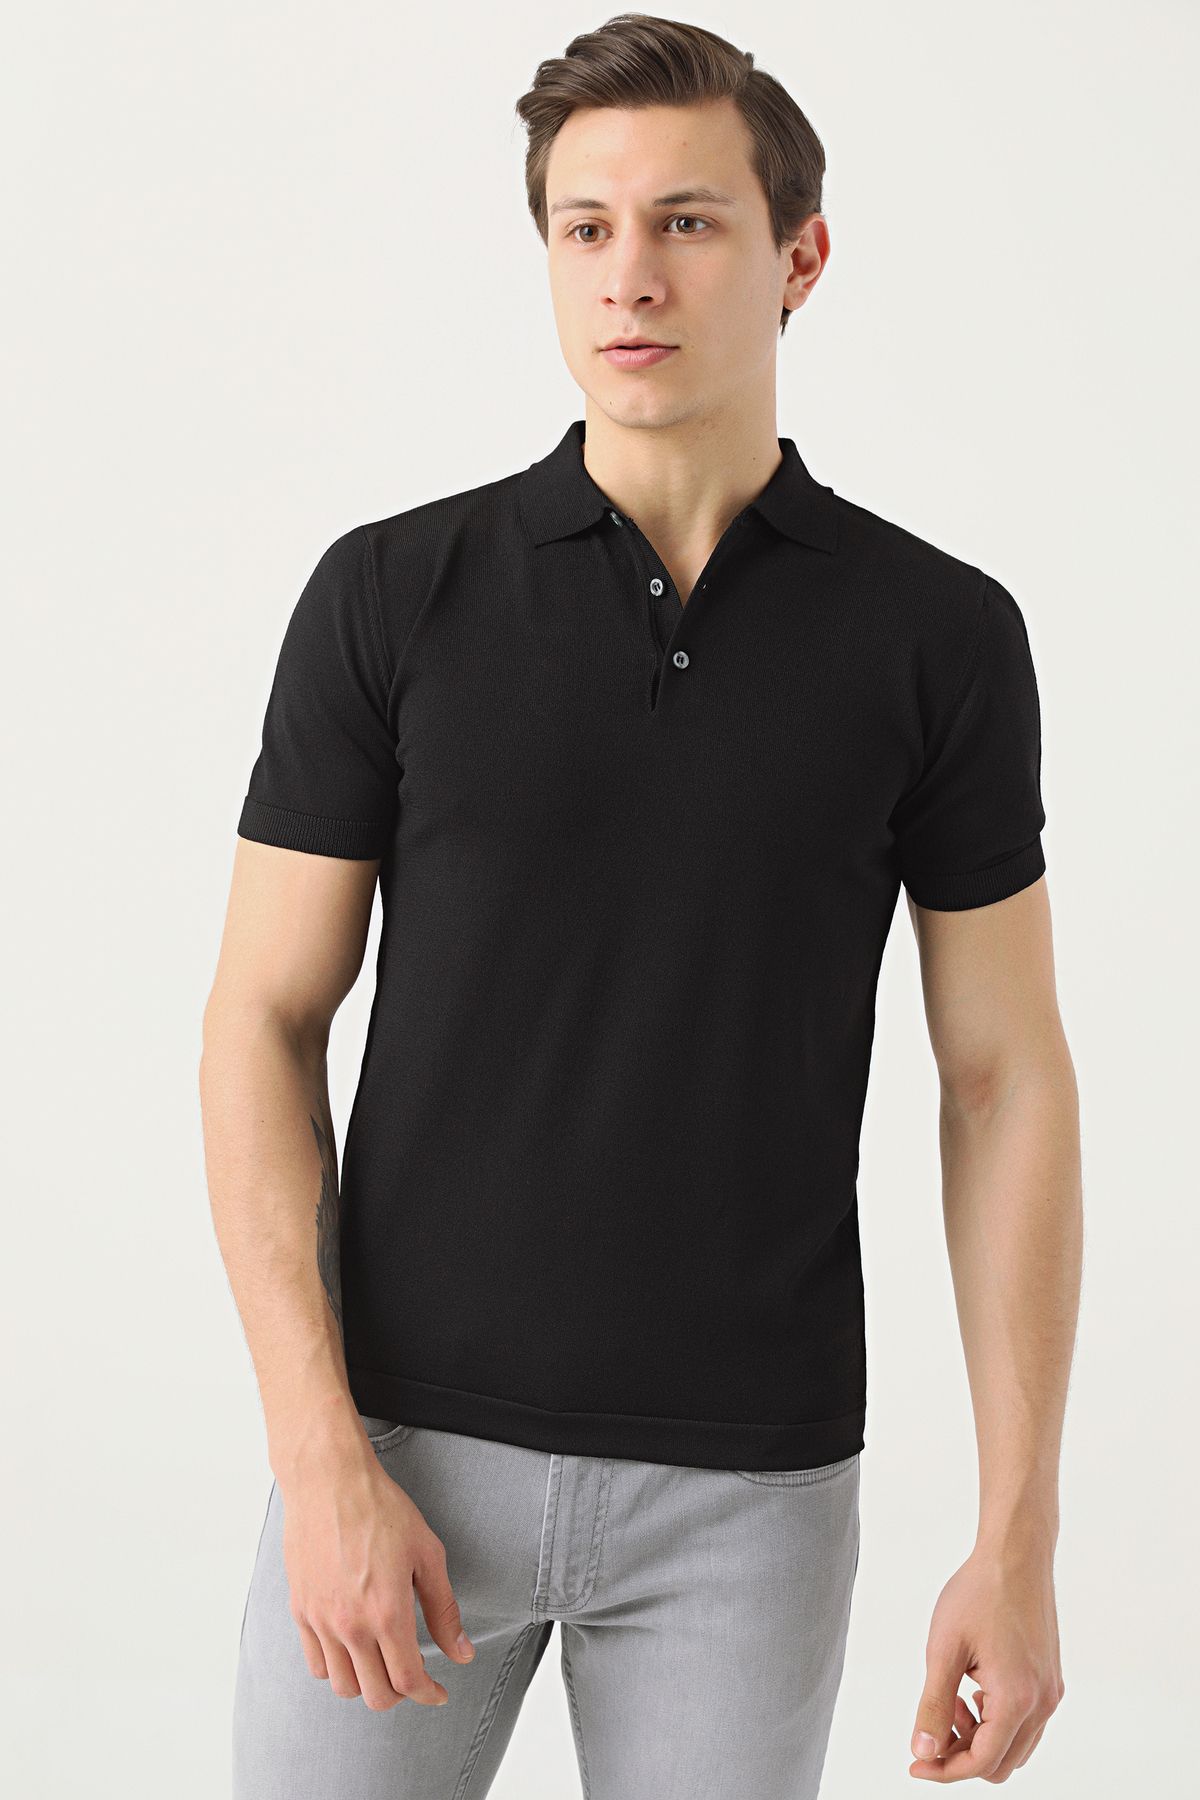 D'S Damat تی شرت بافندگی مسطح سیاه و سفید لاغر